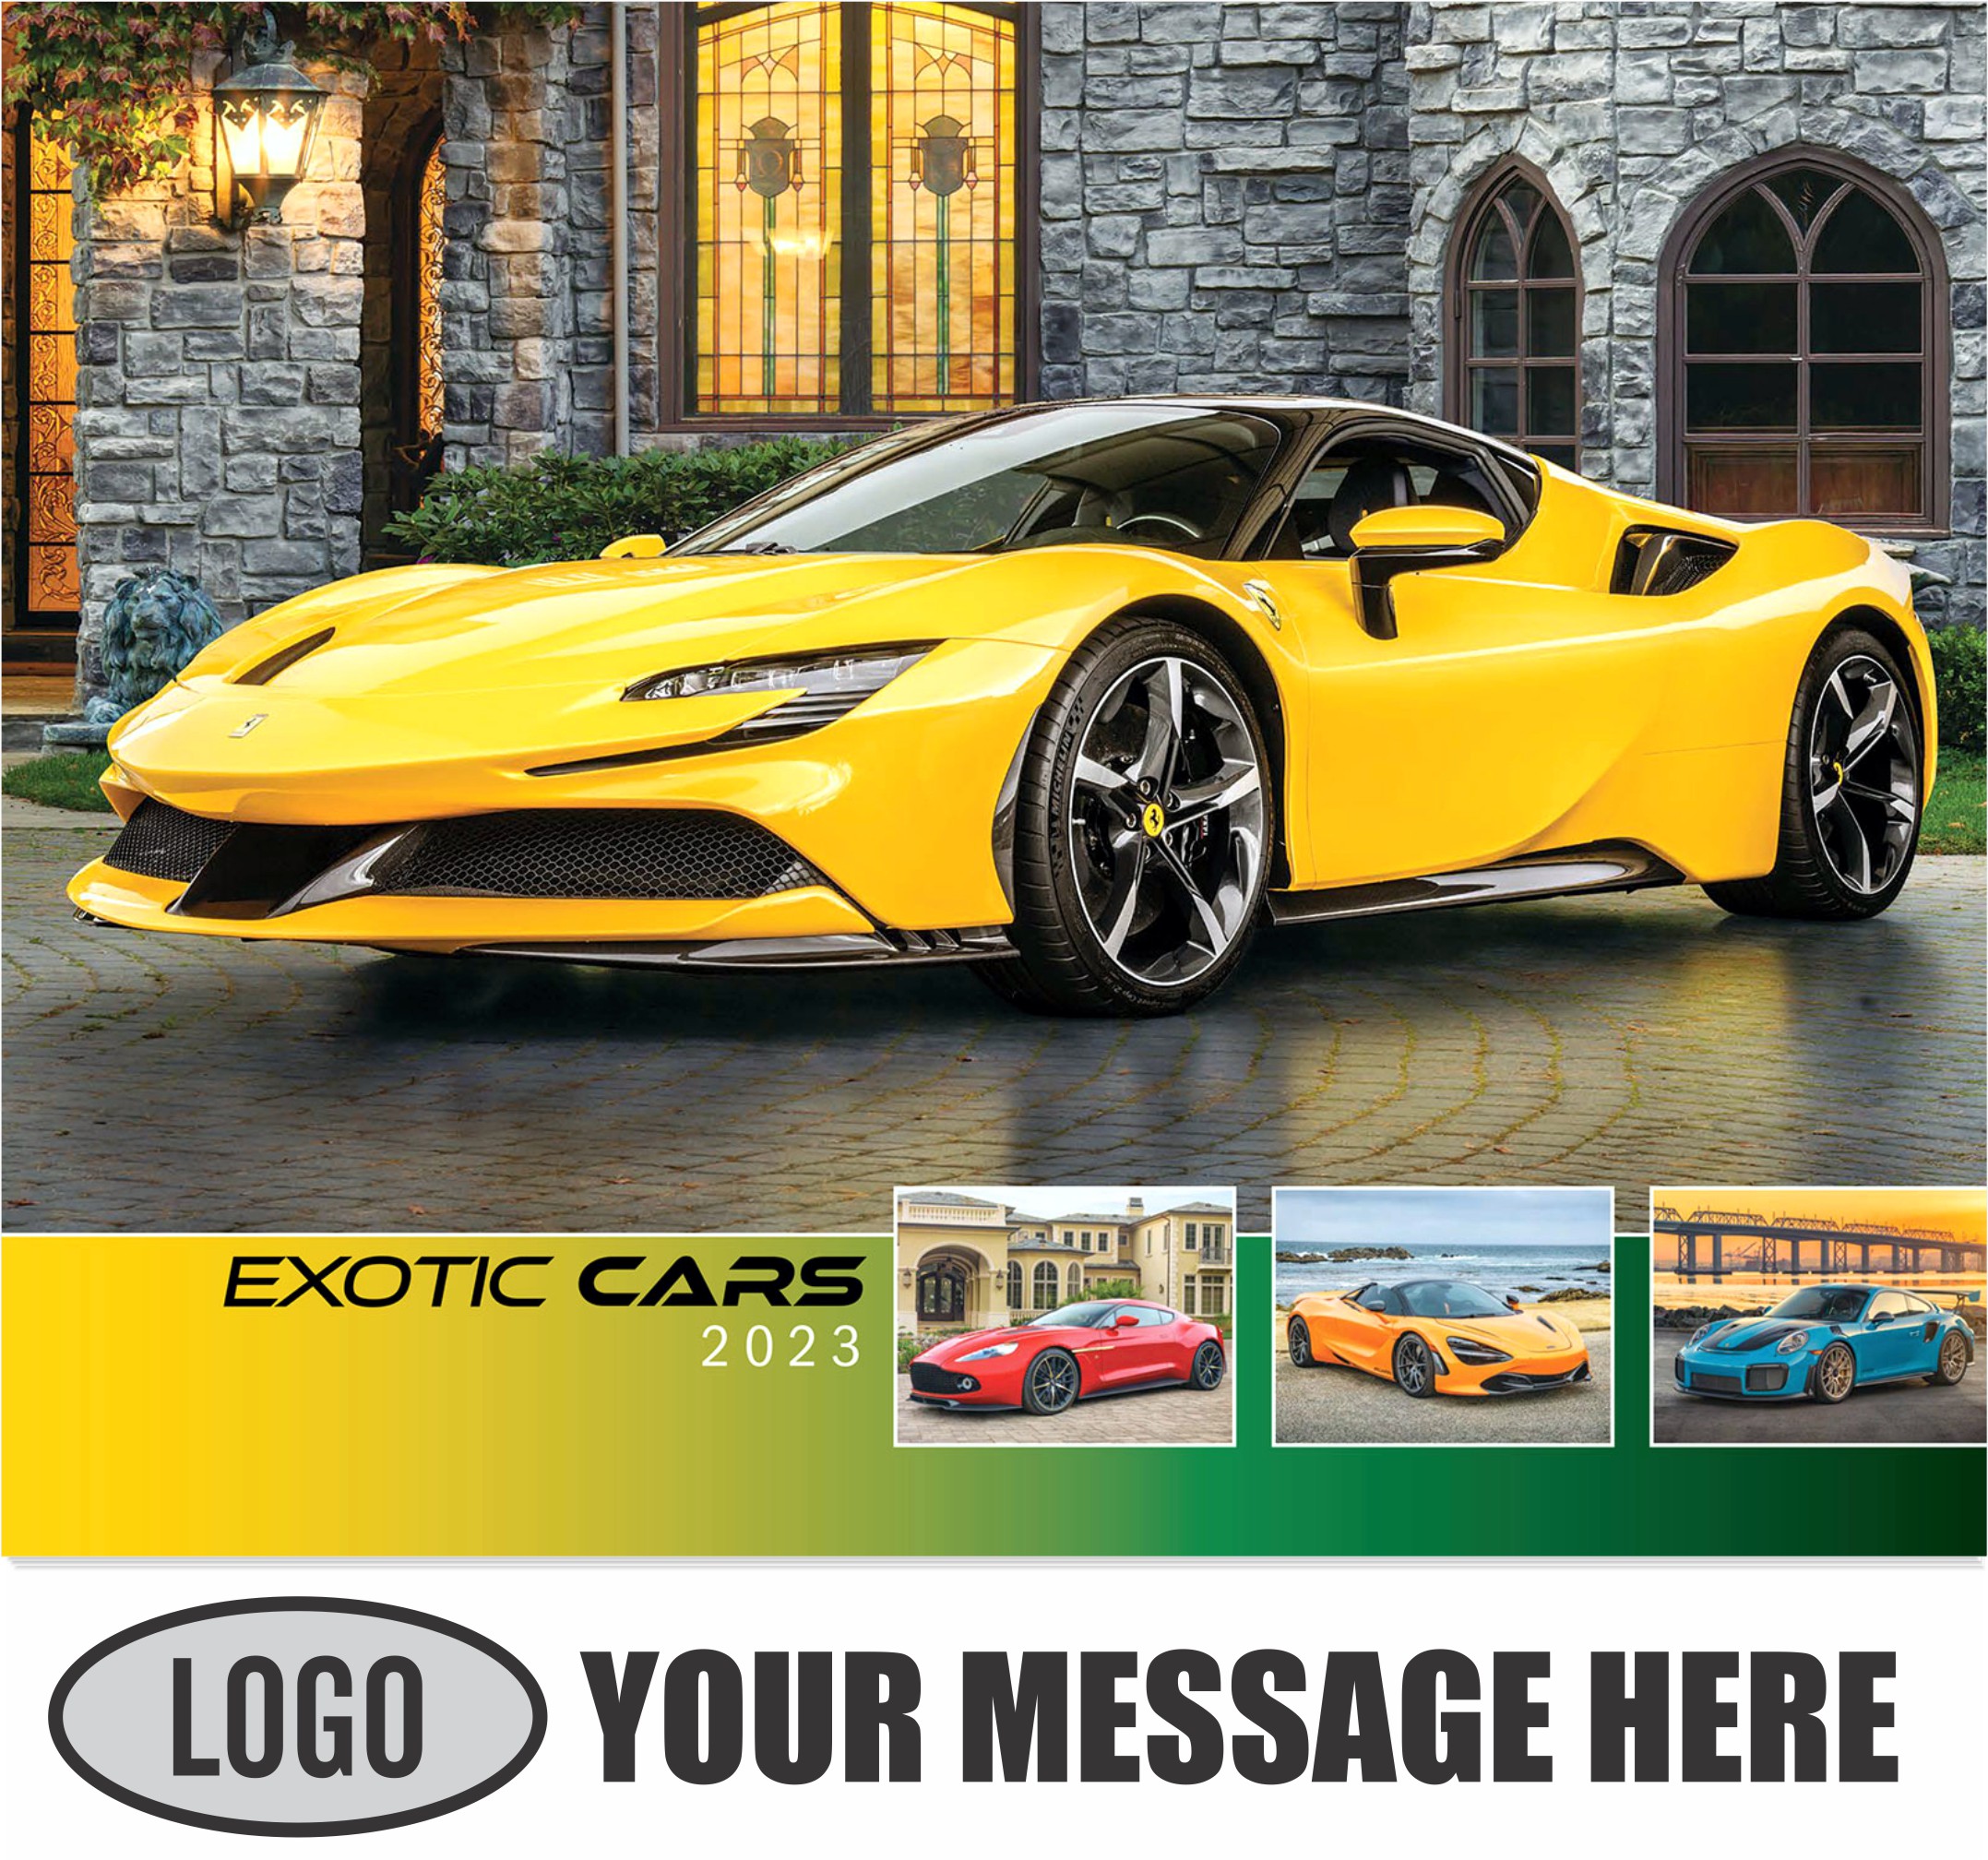 2023 Exotic Cars Promotional Calendar